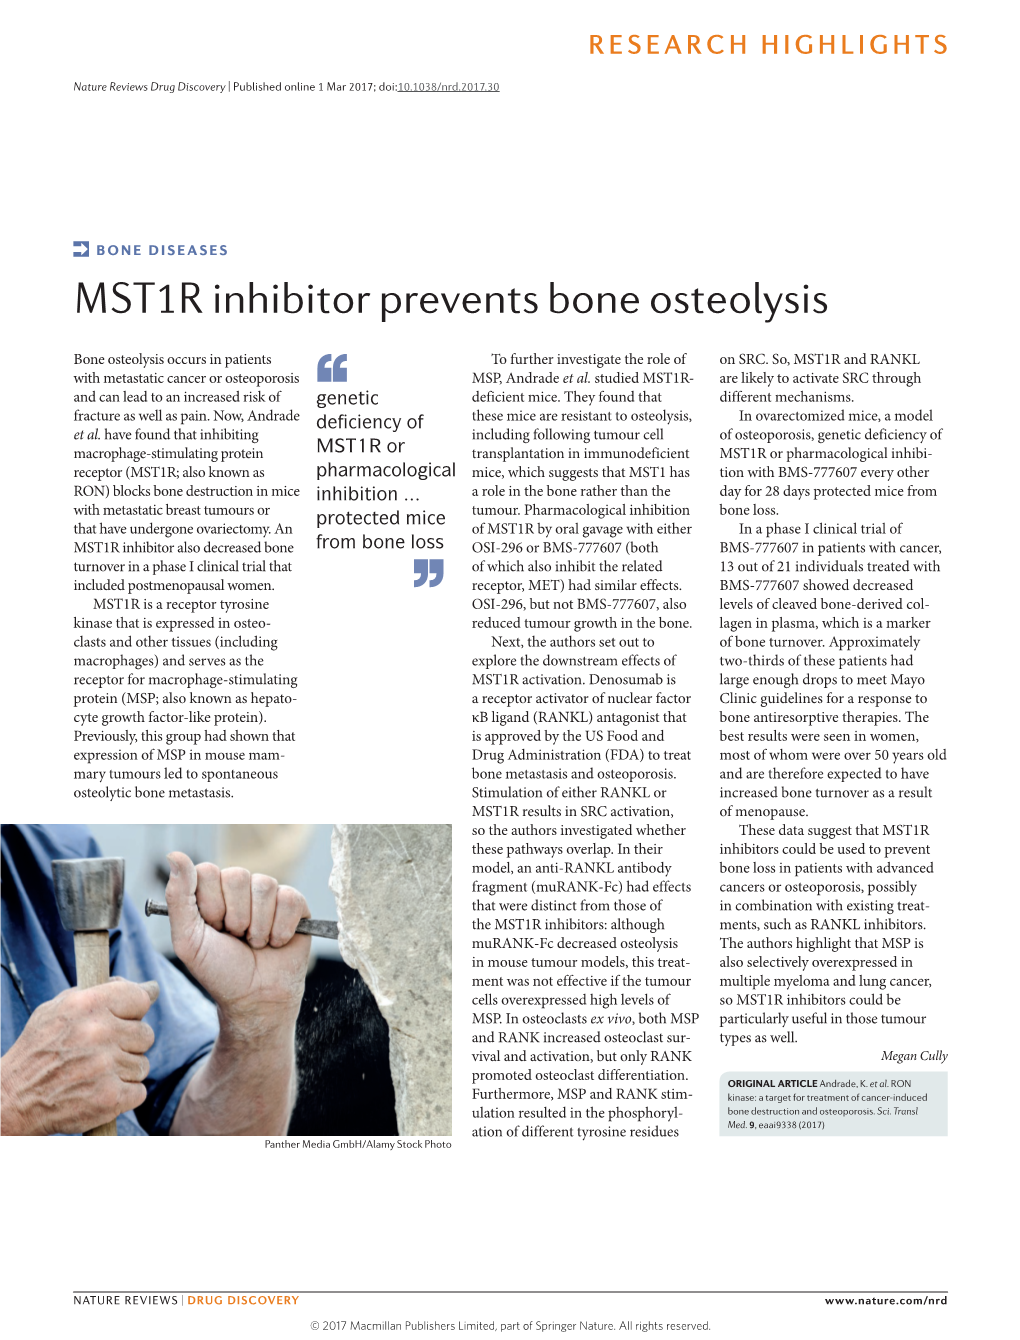 MST1R Inhibitor Prevents Bone Osteolysis